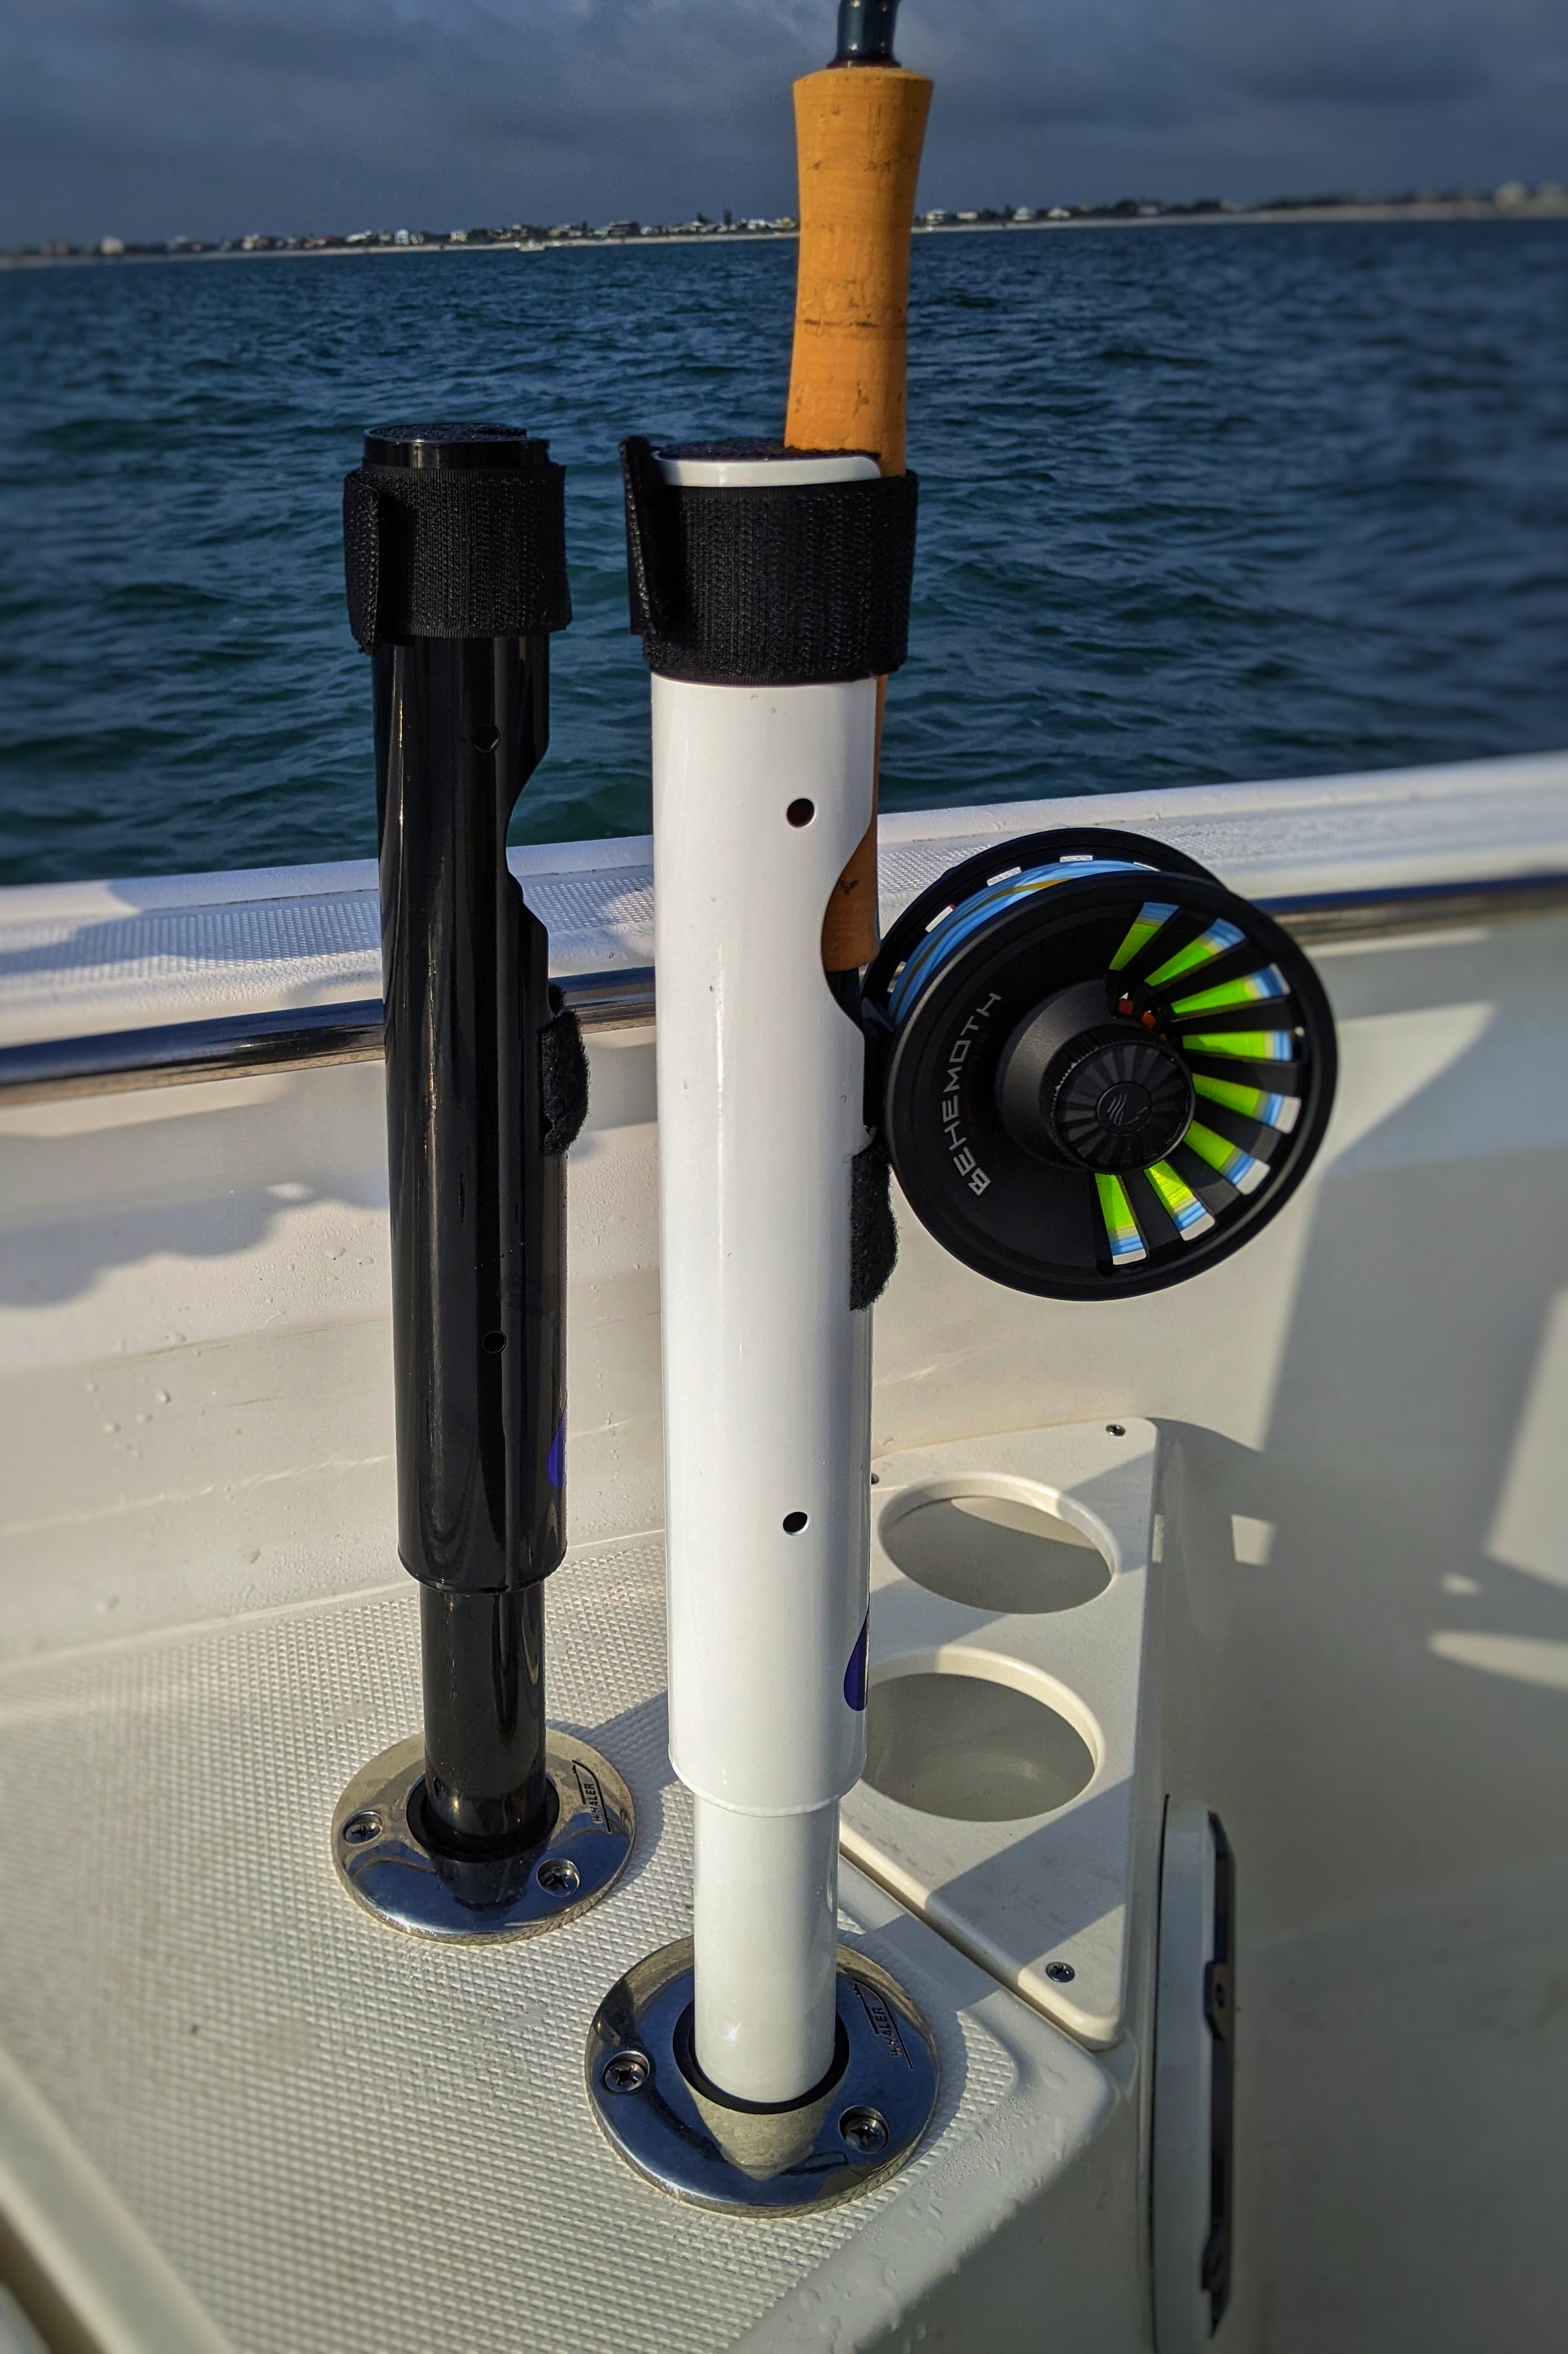 MyBeauty Adjustable Stainless Steel Fishing Rod Pole Ground Holder